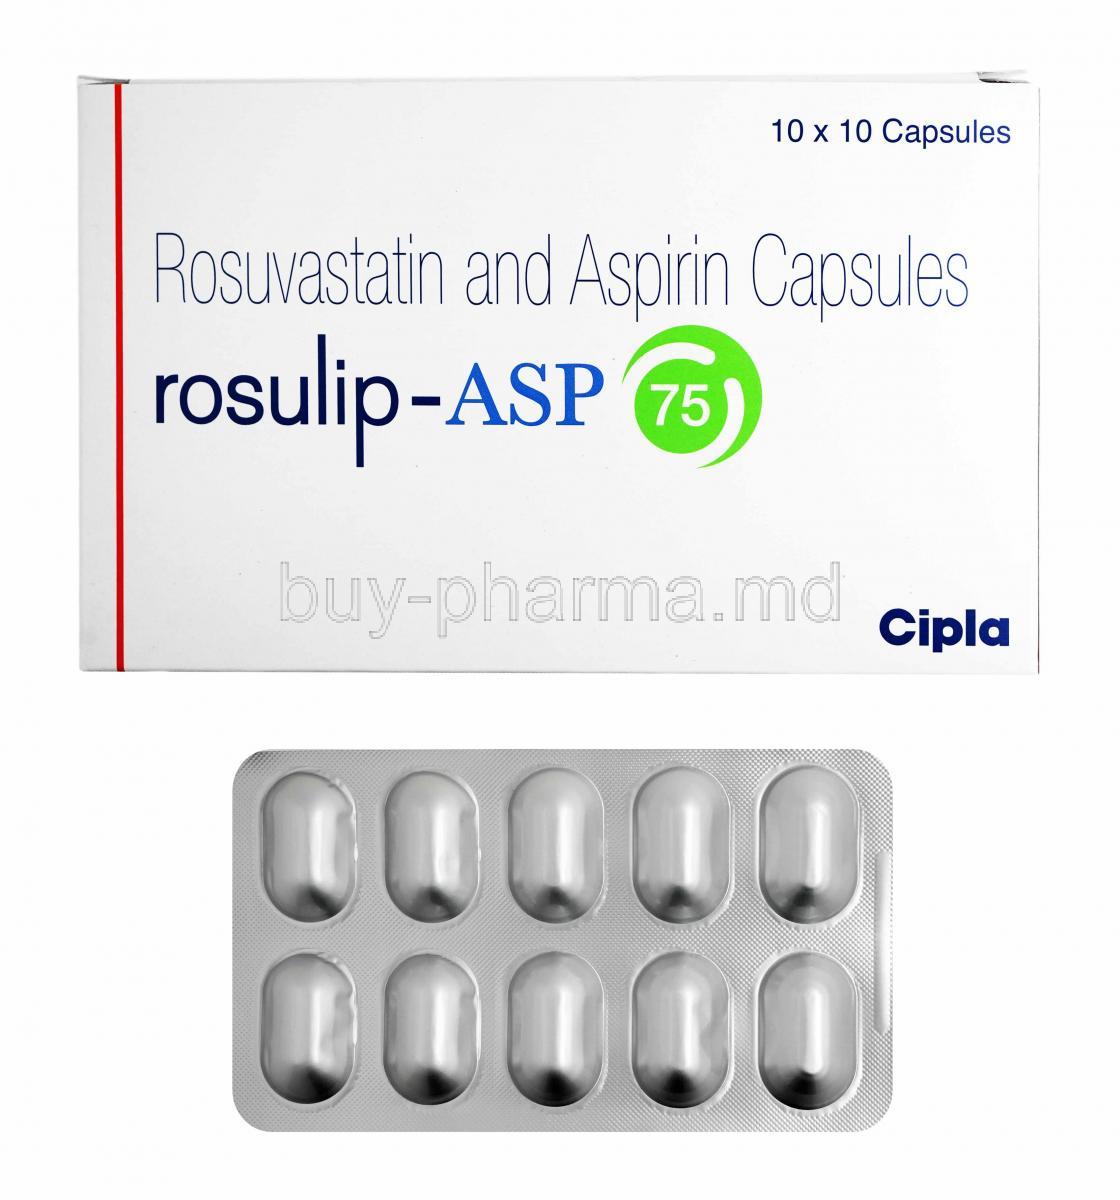 Rosulip-ASP, Rosuvastatin and Aspirin 75mg box and capsules